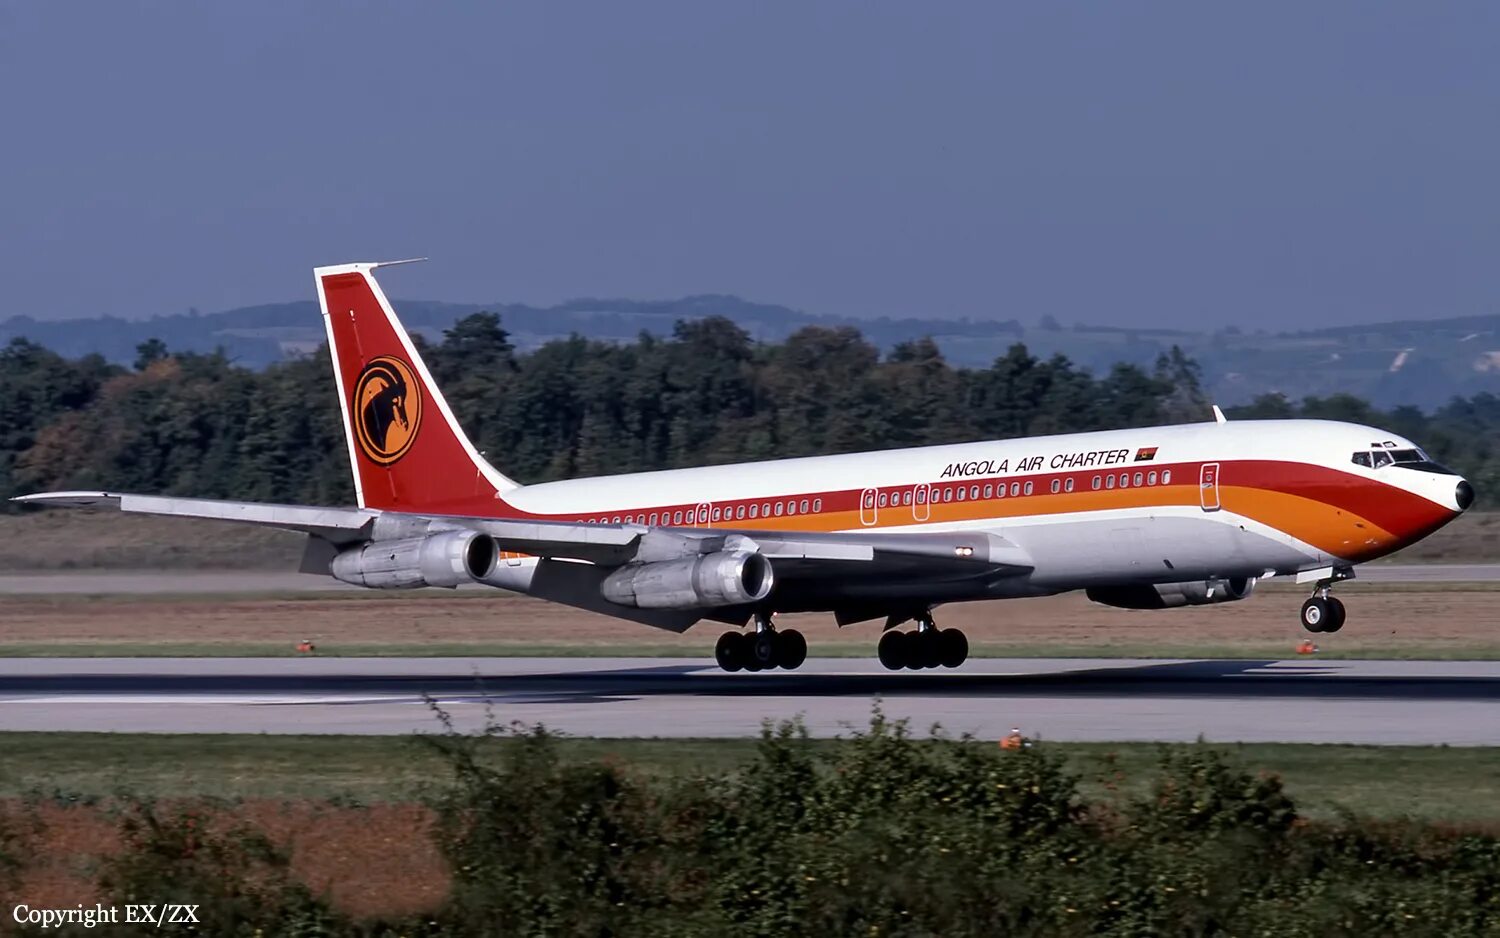 Эйр чартер. Boeing 707 Ангола. Angola Air Charter. Anthony Cowland Airlines Art.